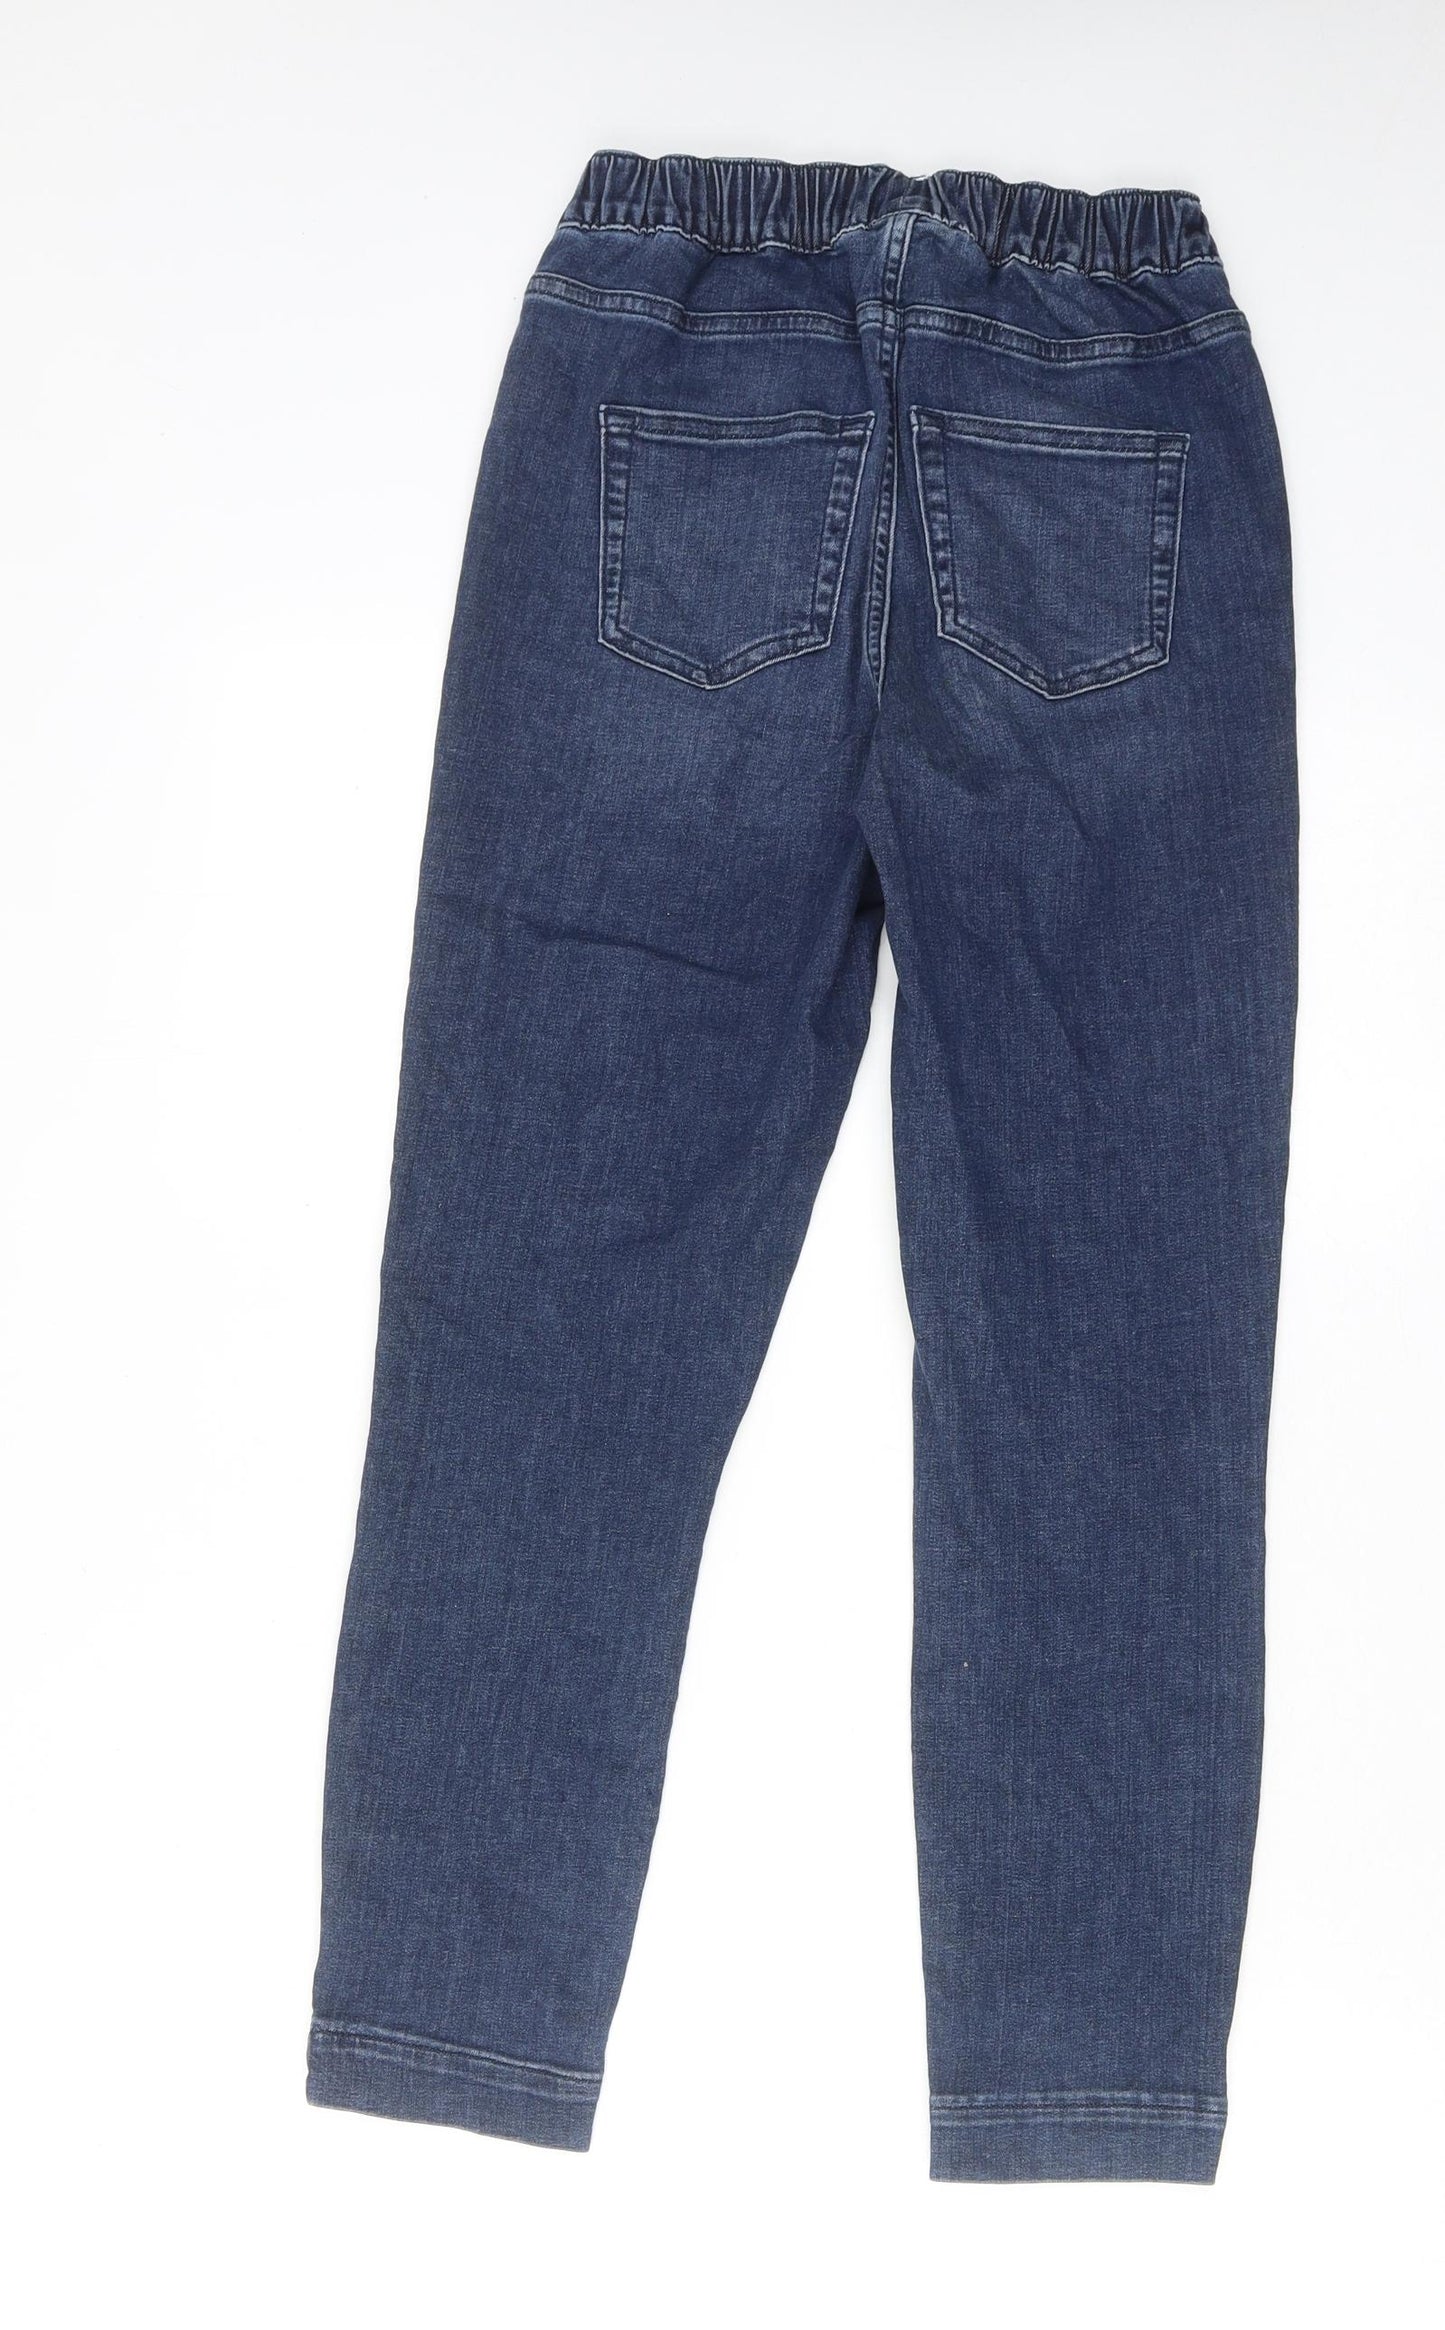 White Stuff Womens Blue Cotton Straight Jeans Size 8 Regular